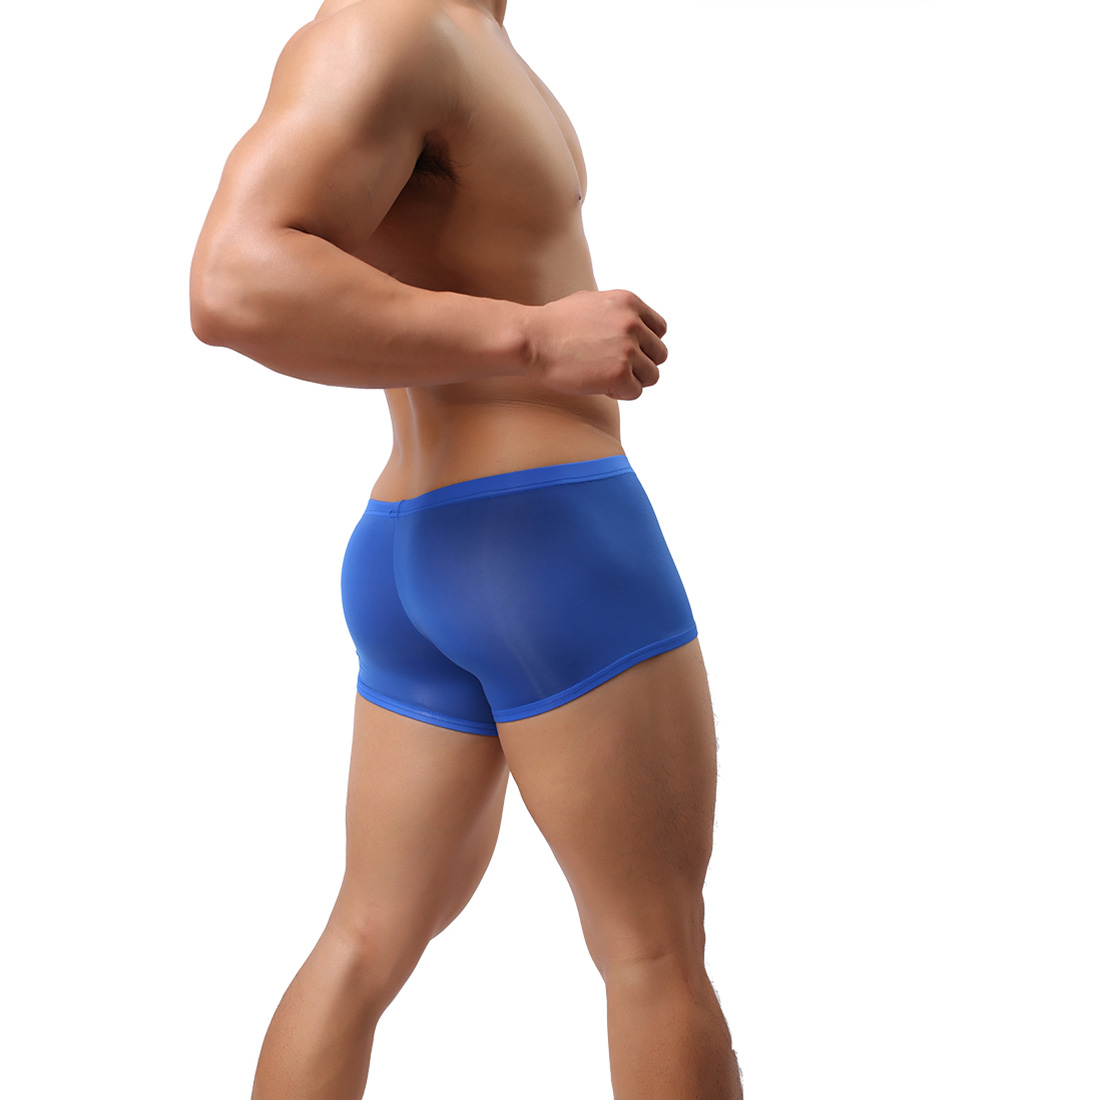 Men's Sexy Lingerie Underwear See-through Boxer Shorts Underpants WH42 Blue M